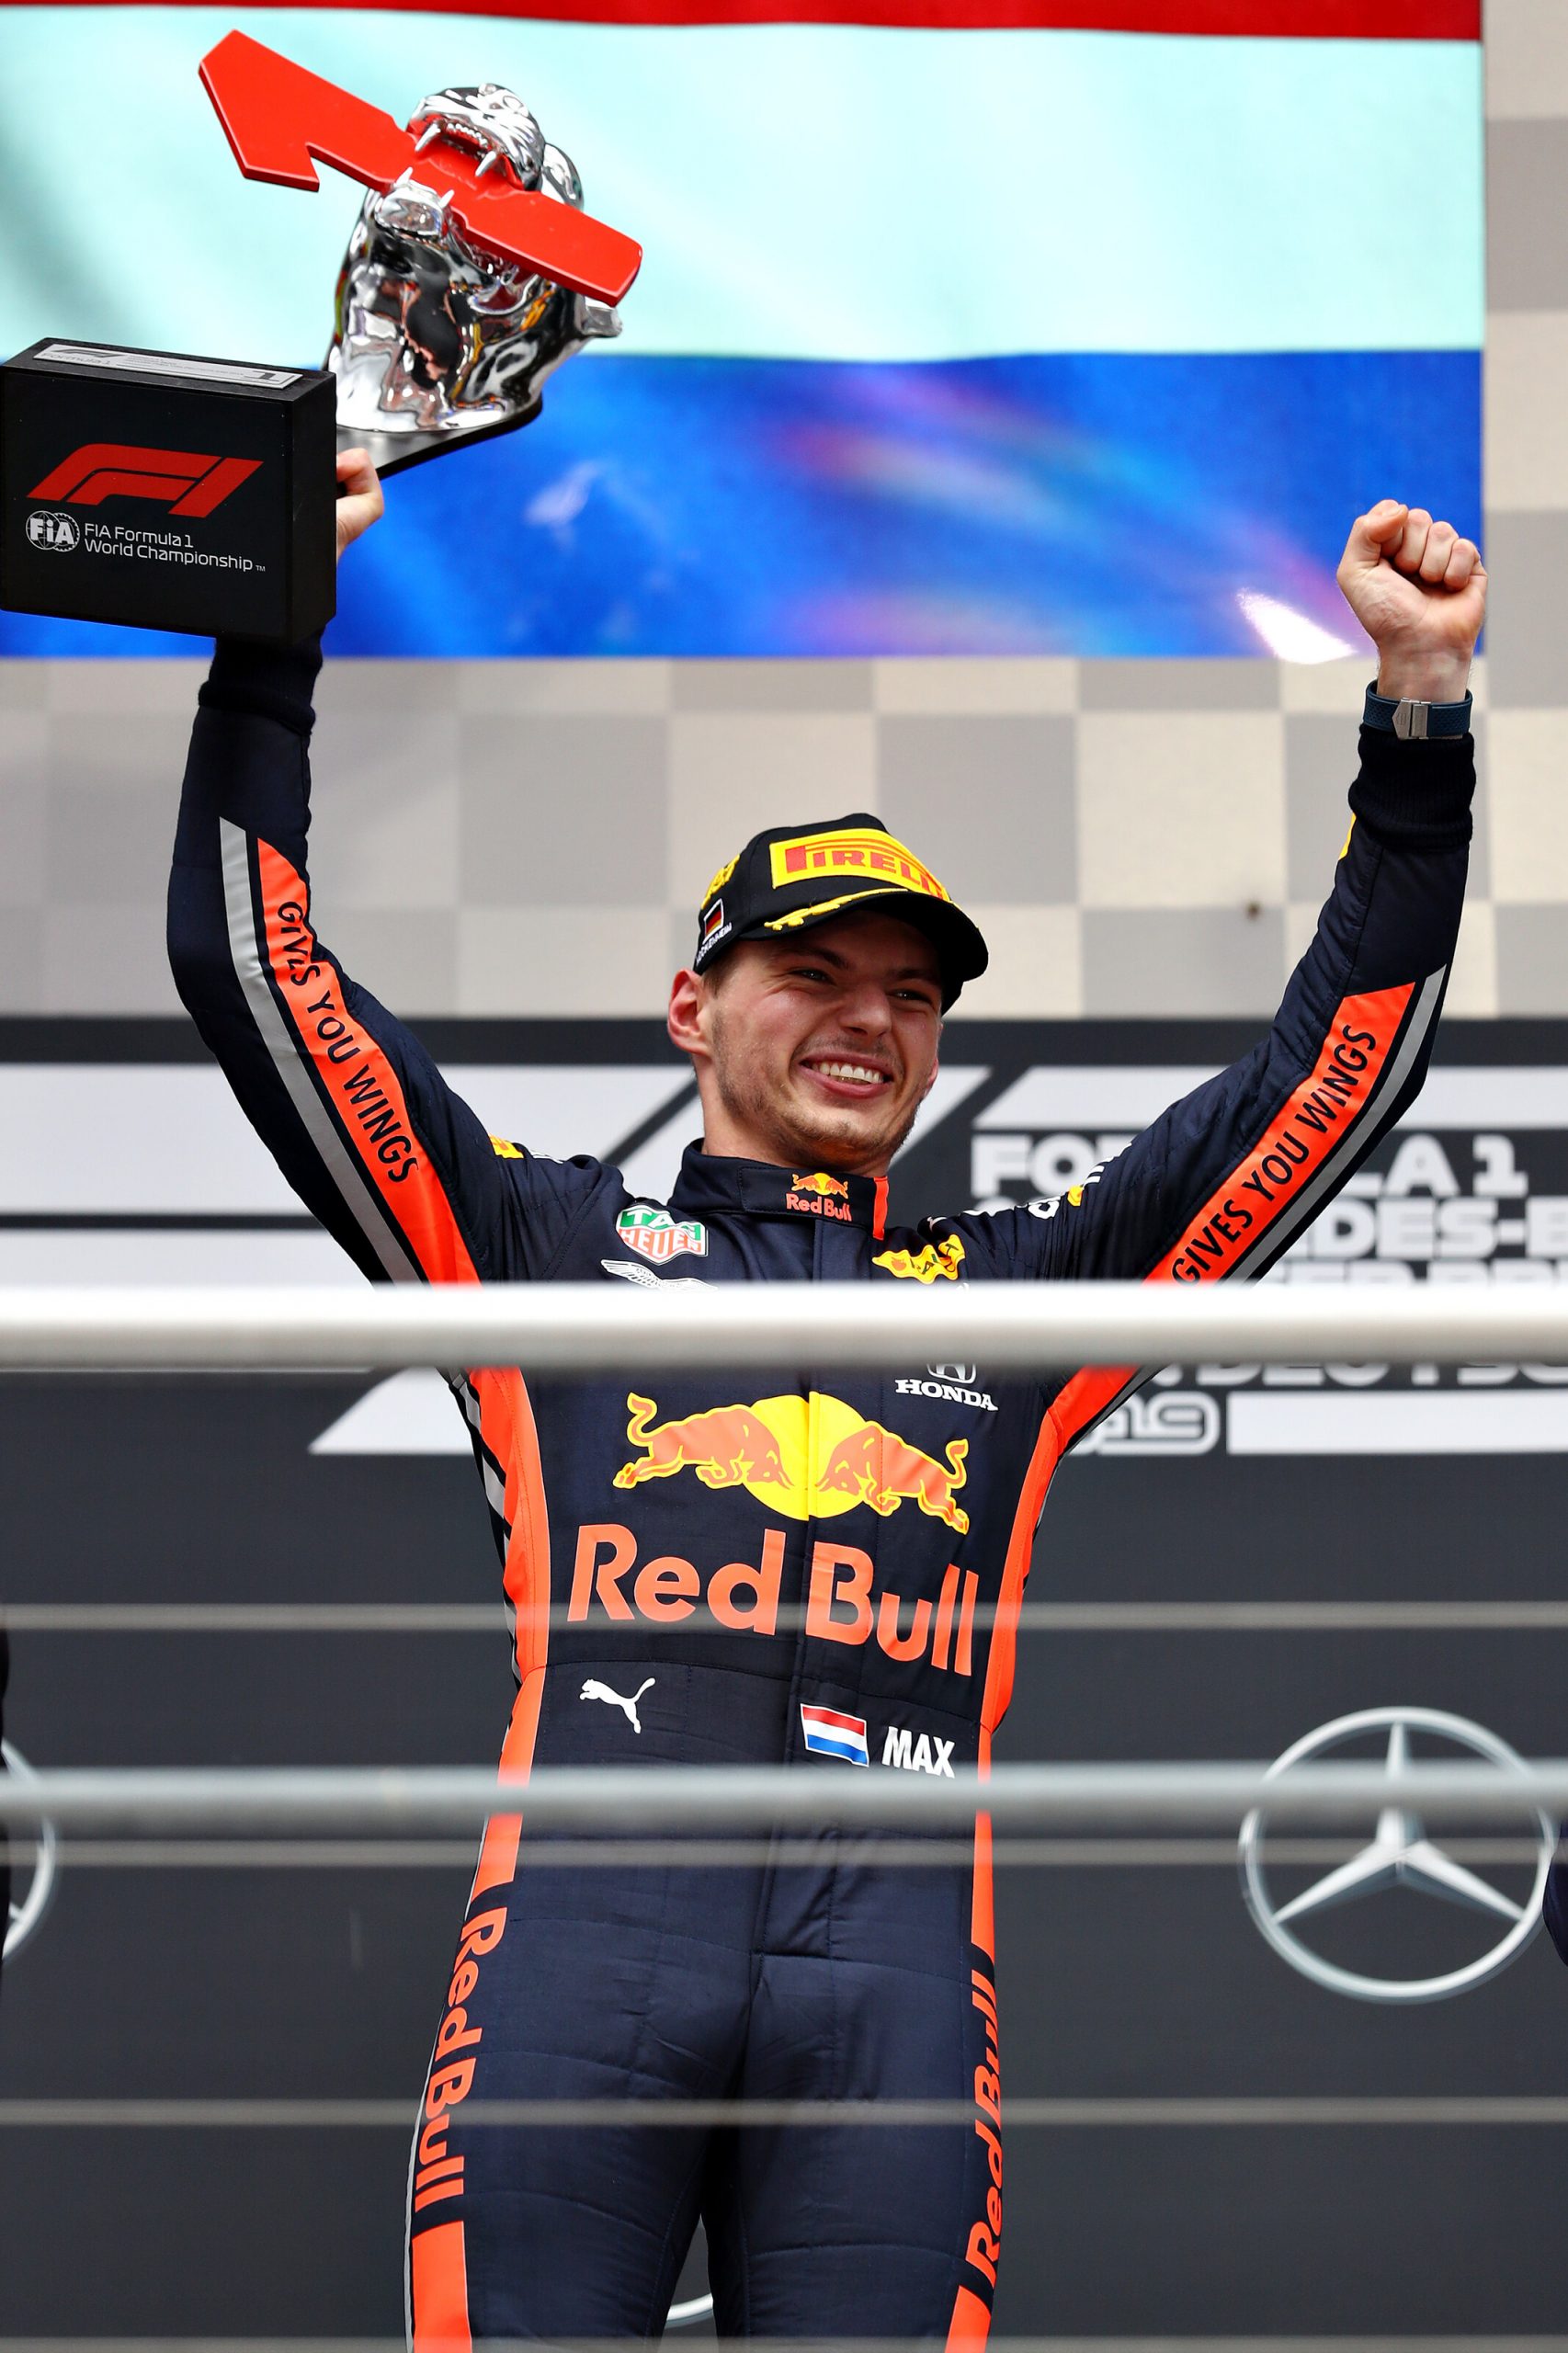 f1chronicle-2019 German Grand Prix, Sunday - Max Verstappen